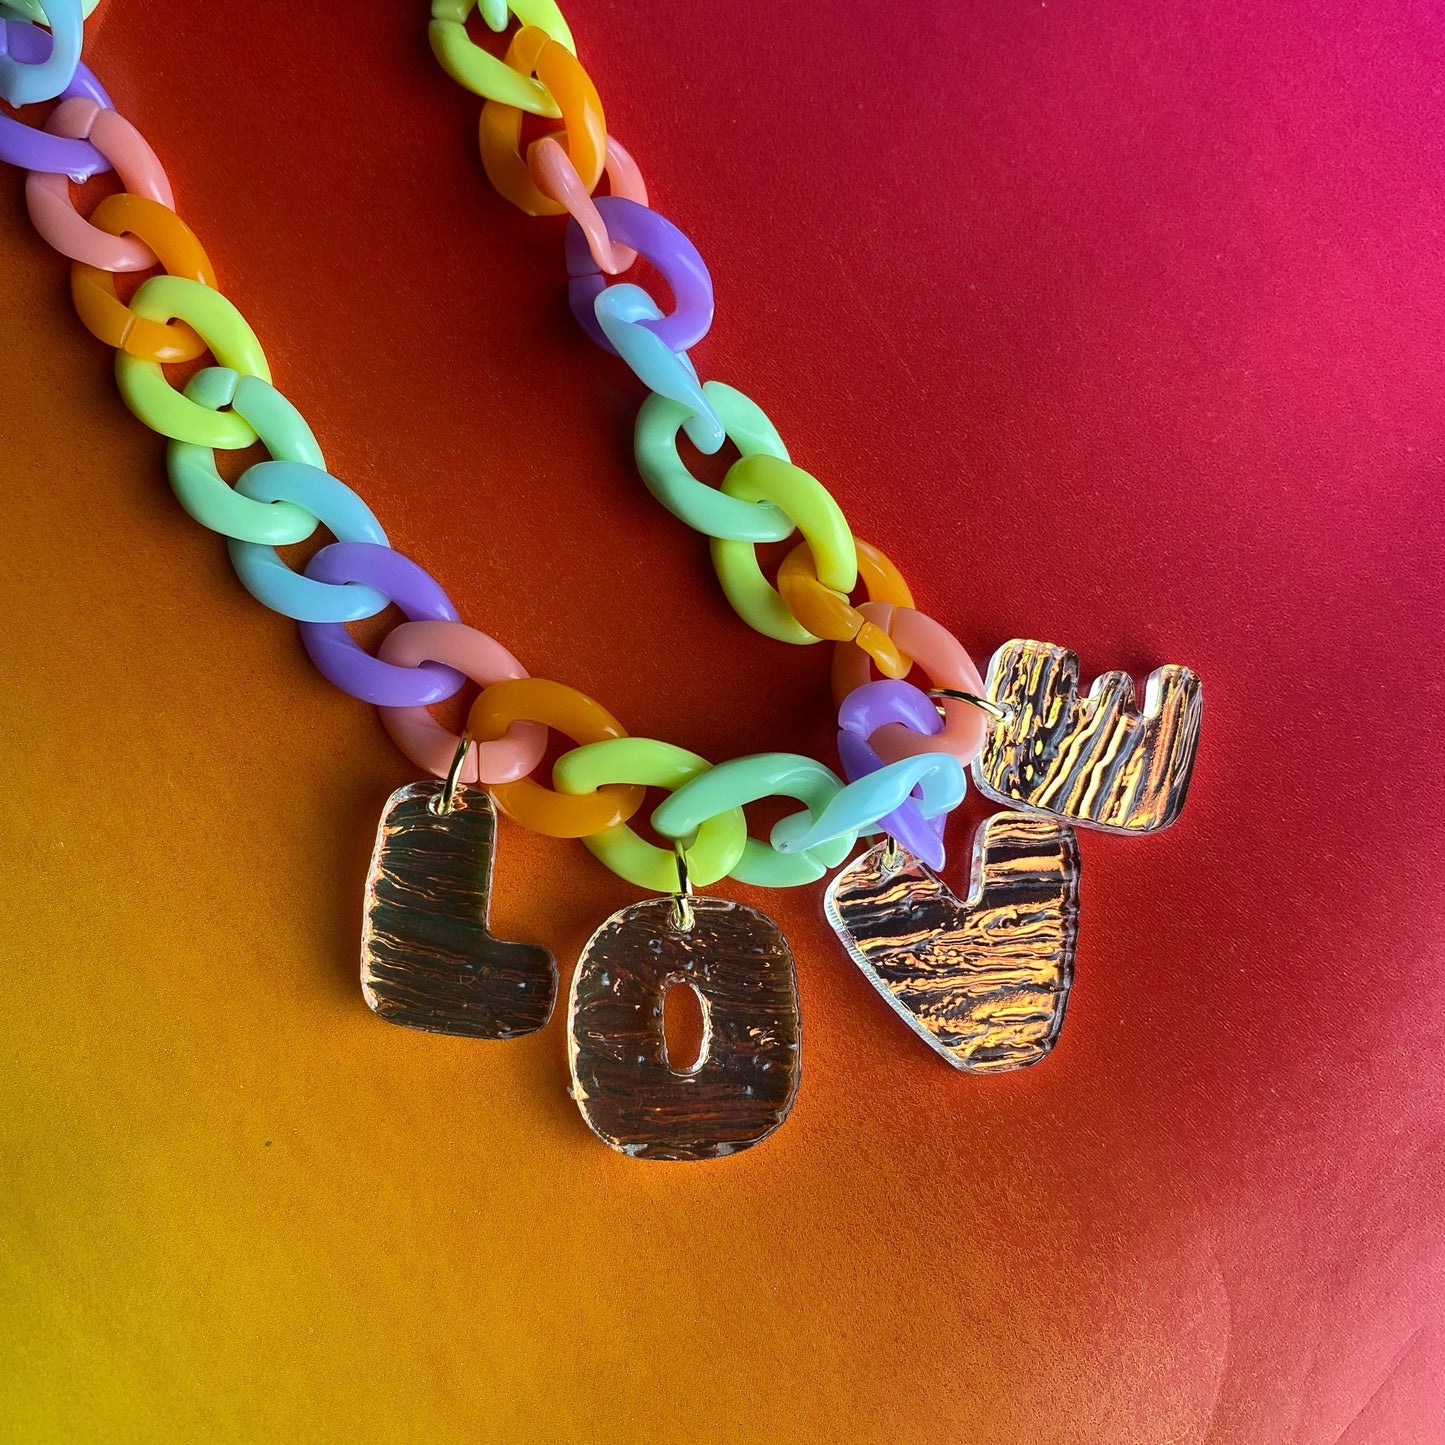 Pastel Rainbow "LOVE" Necklace